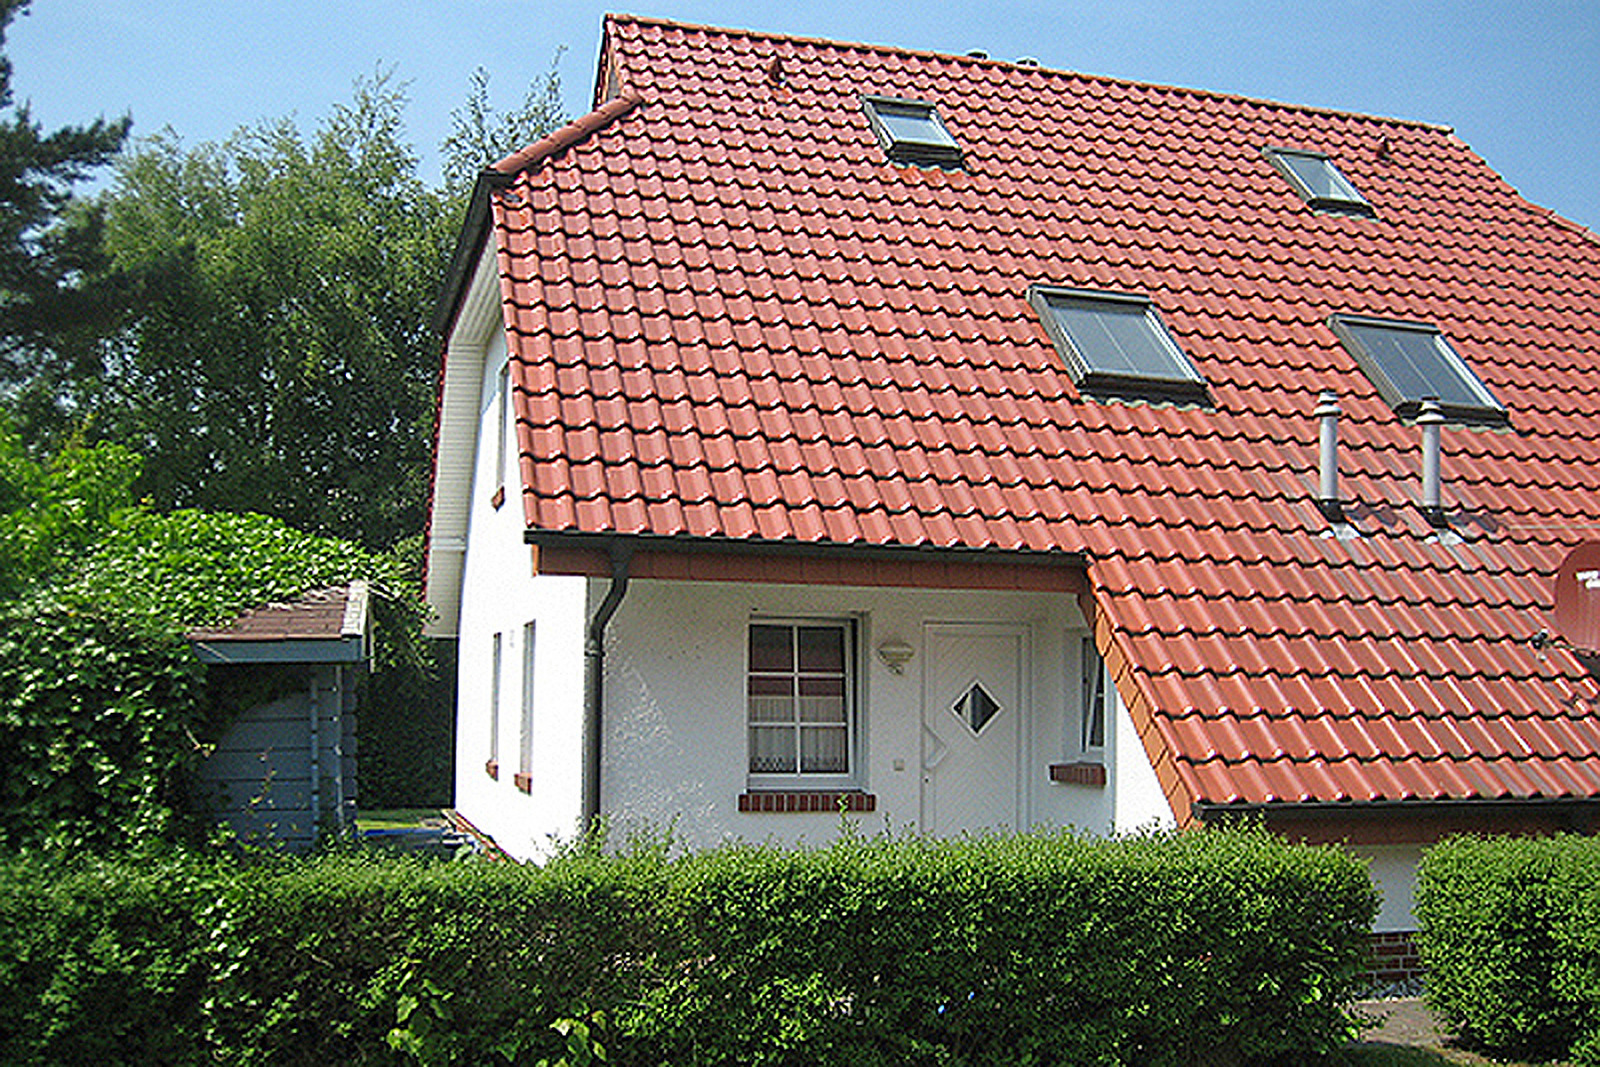 54 Grad Nord Ferienhaus  Mecklenburger OstseekÃ¼ste